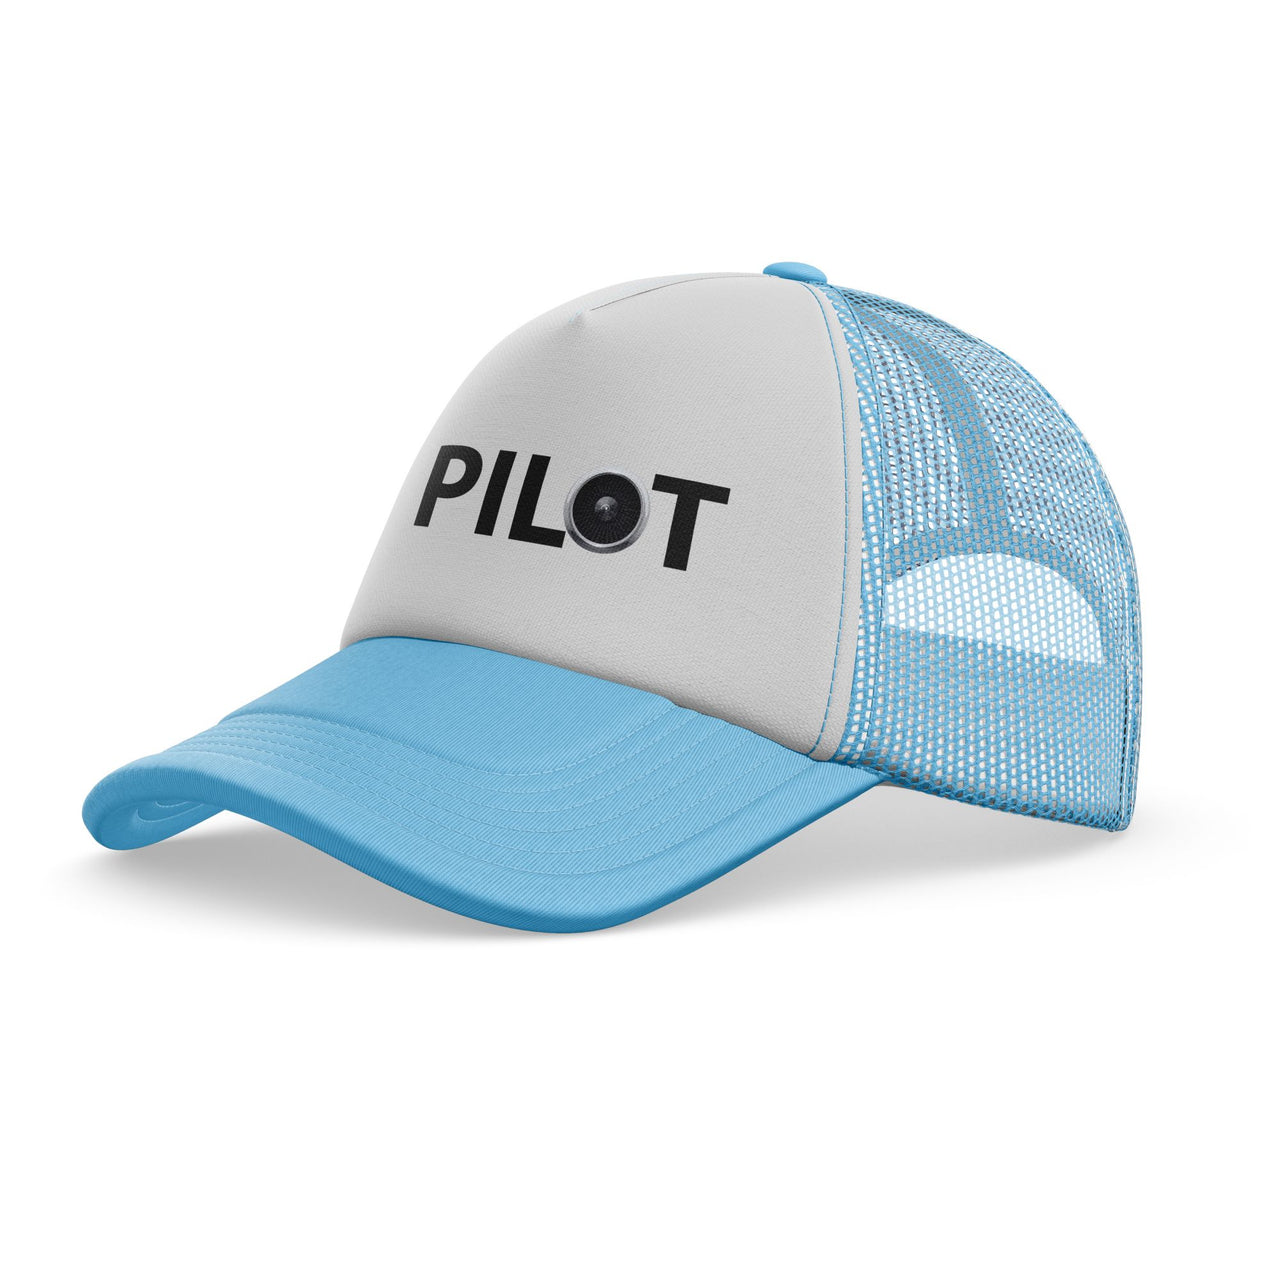 Pilot & Jet Engine Designed Trucker Caps & Hats